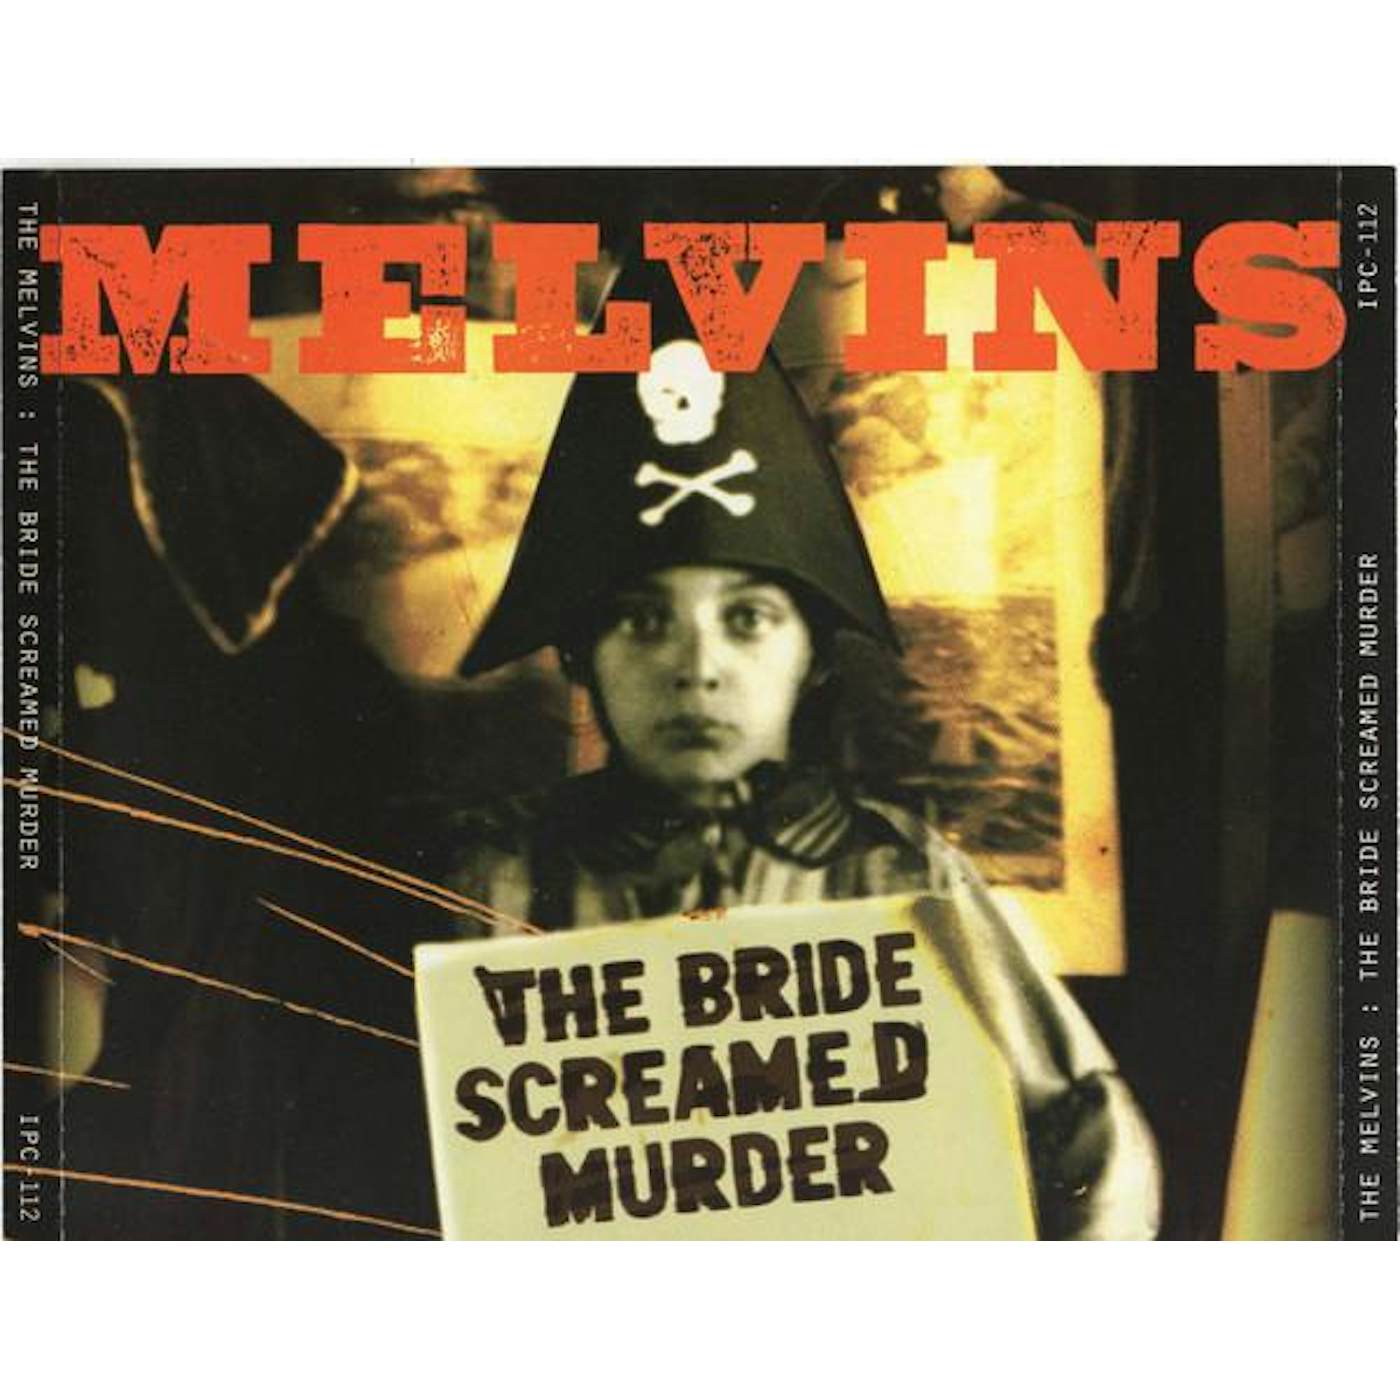 Melvins BRIDE SCREAMED MURDER CD